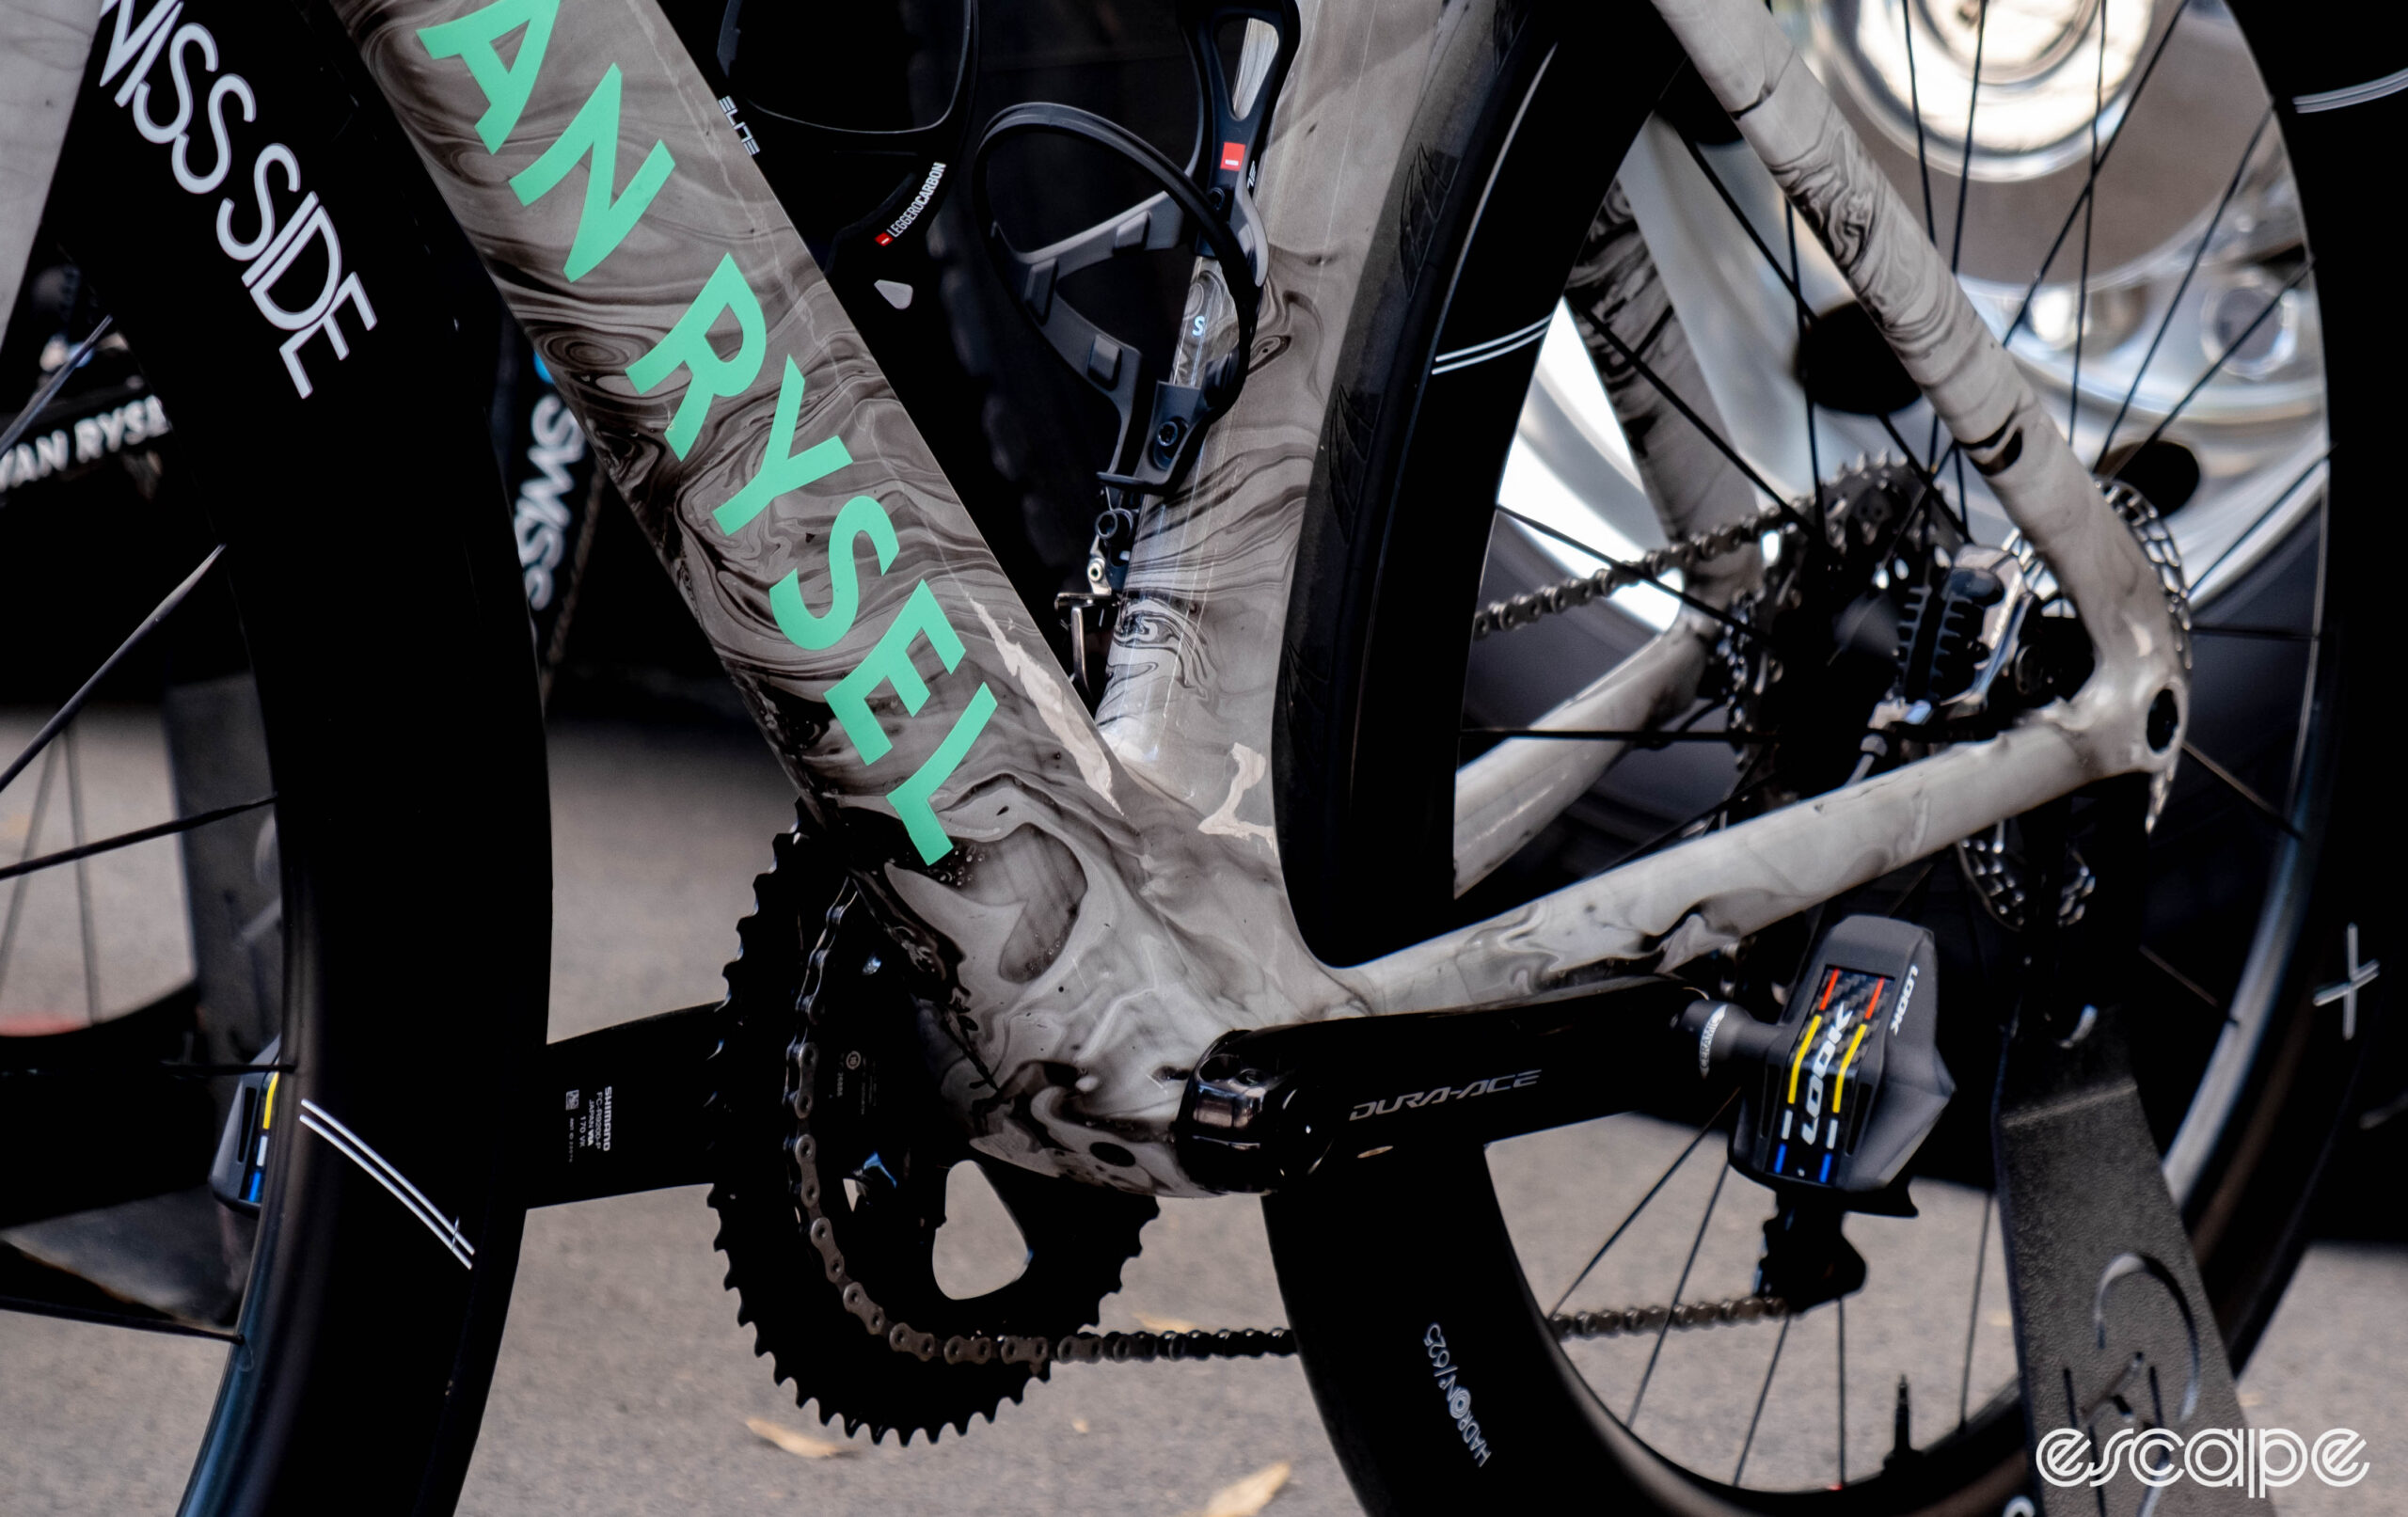 The photo shows Van Rysel's new FCR Pro aero bike bottom bracket